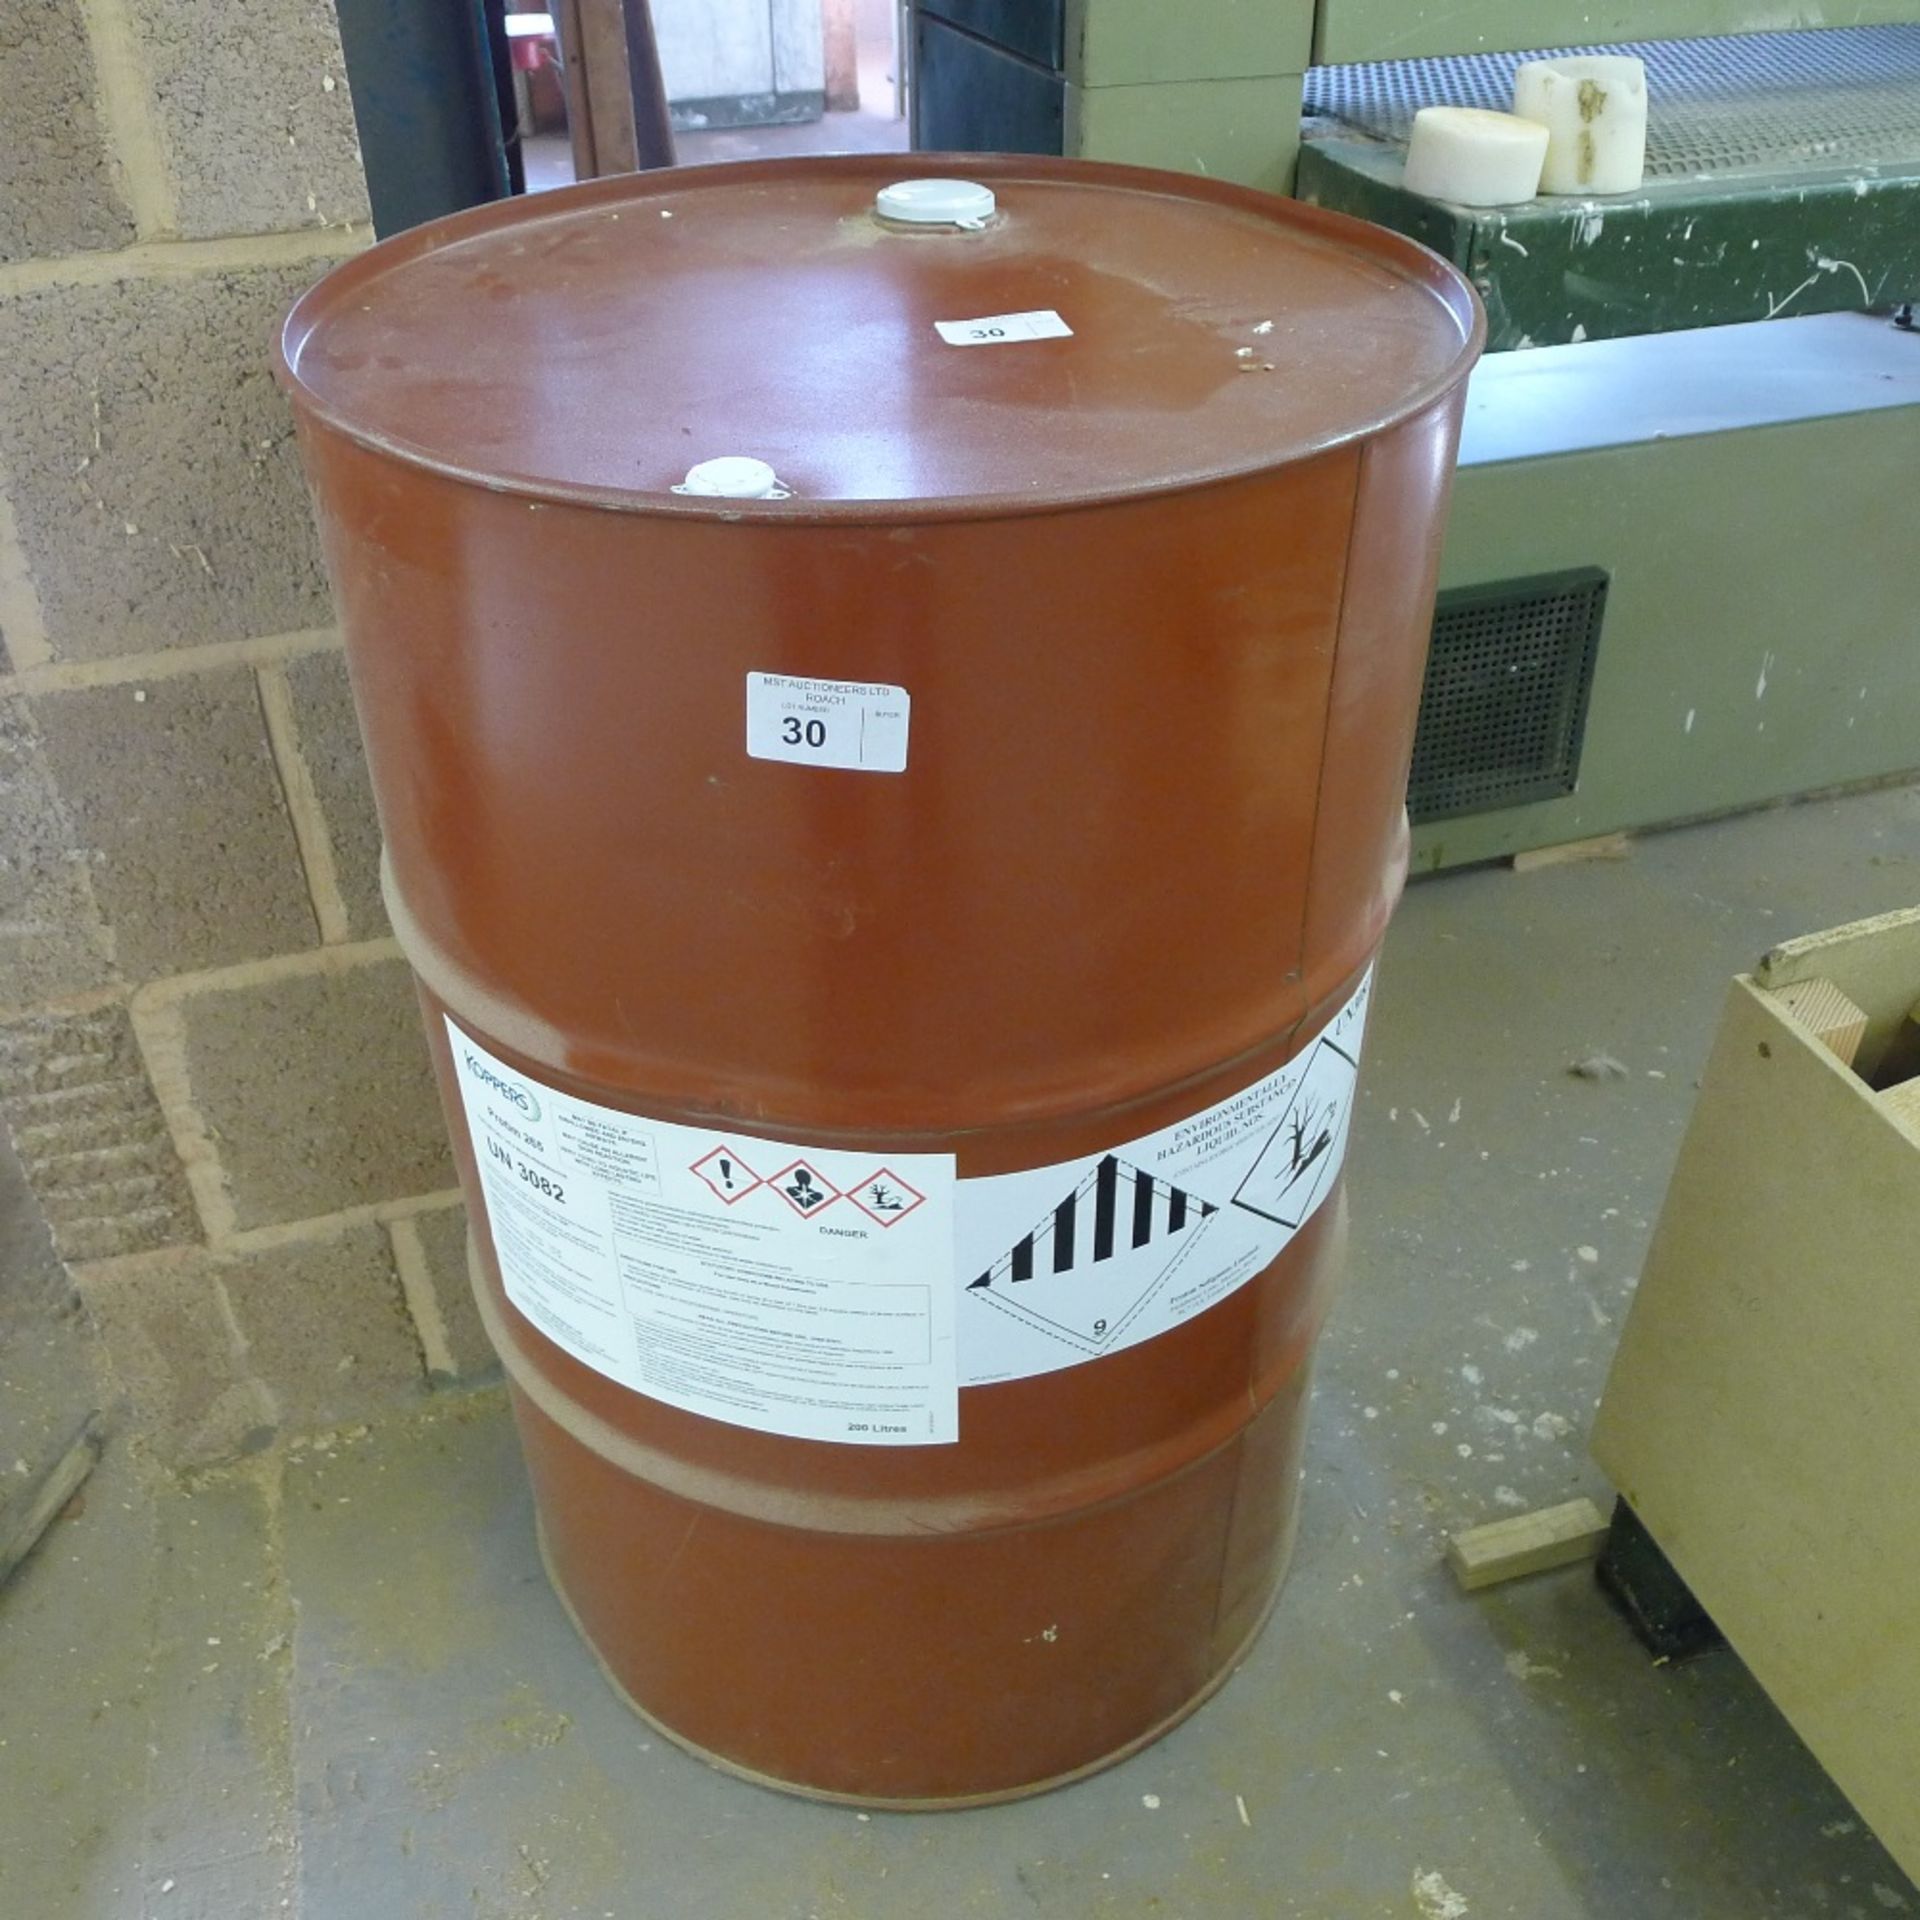 1 x 200L drum (sealed) of Koppers Protim 265 wood preservative